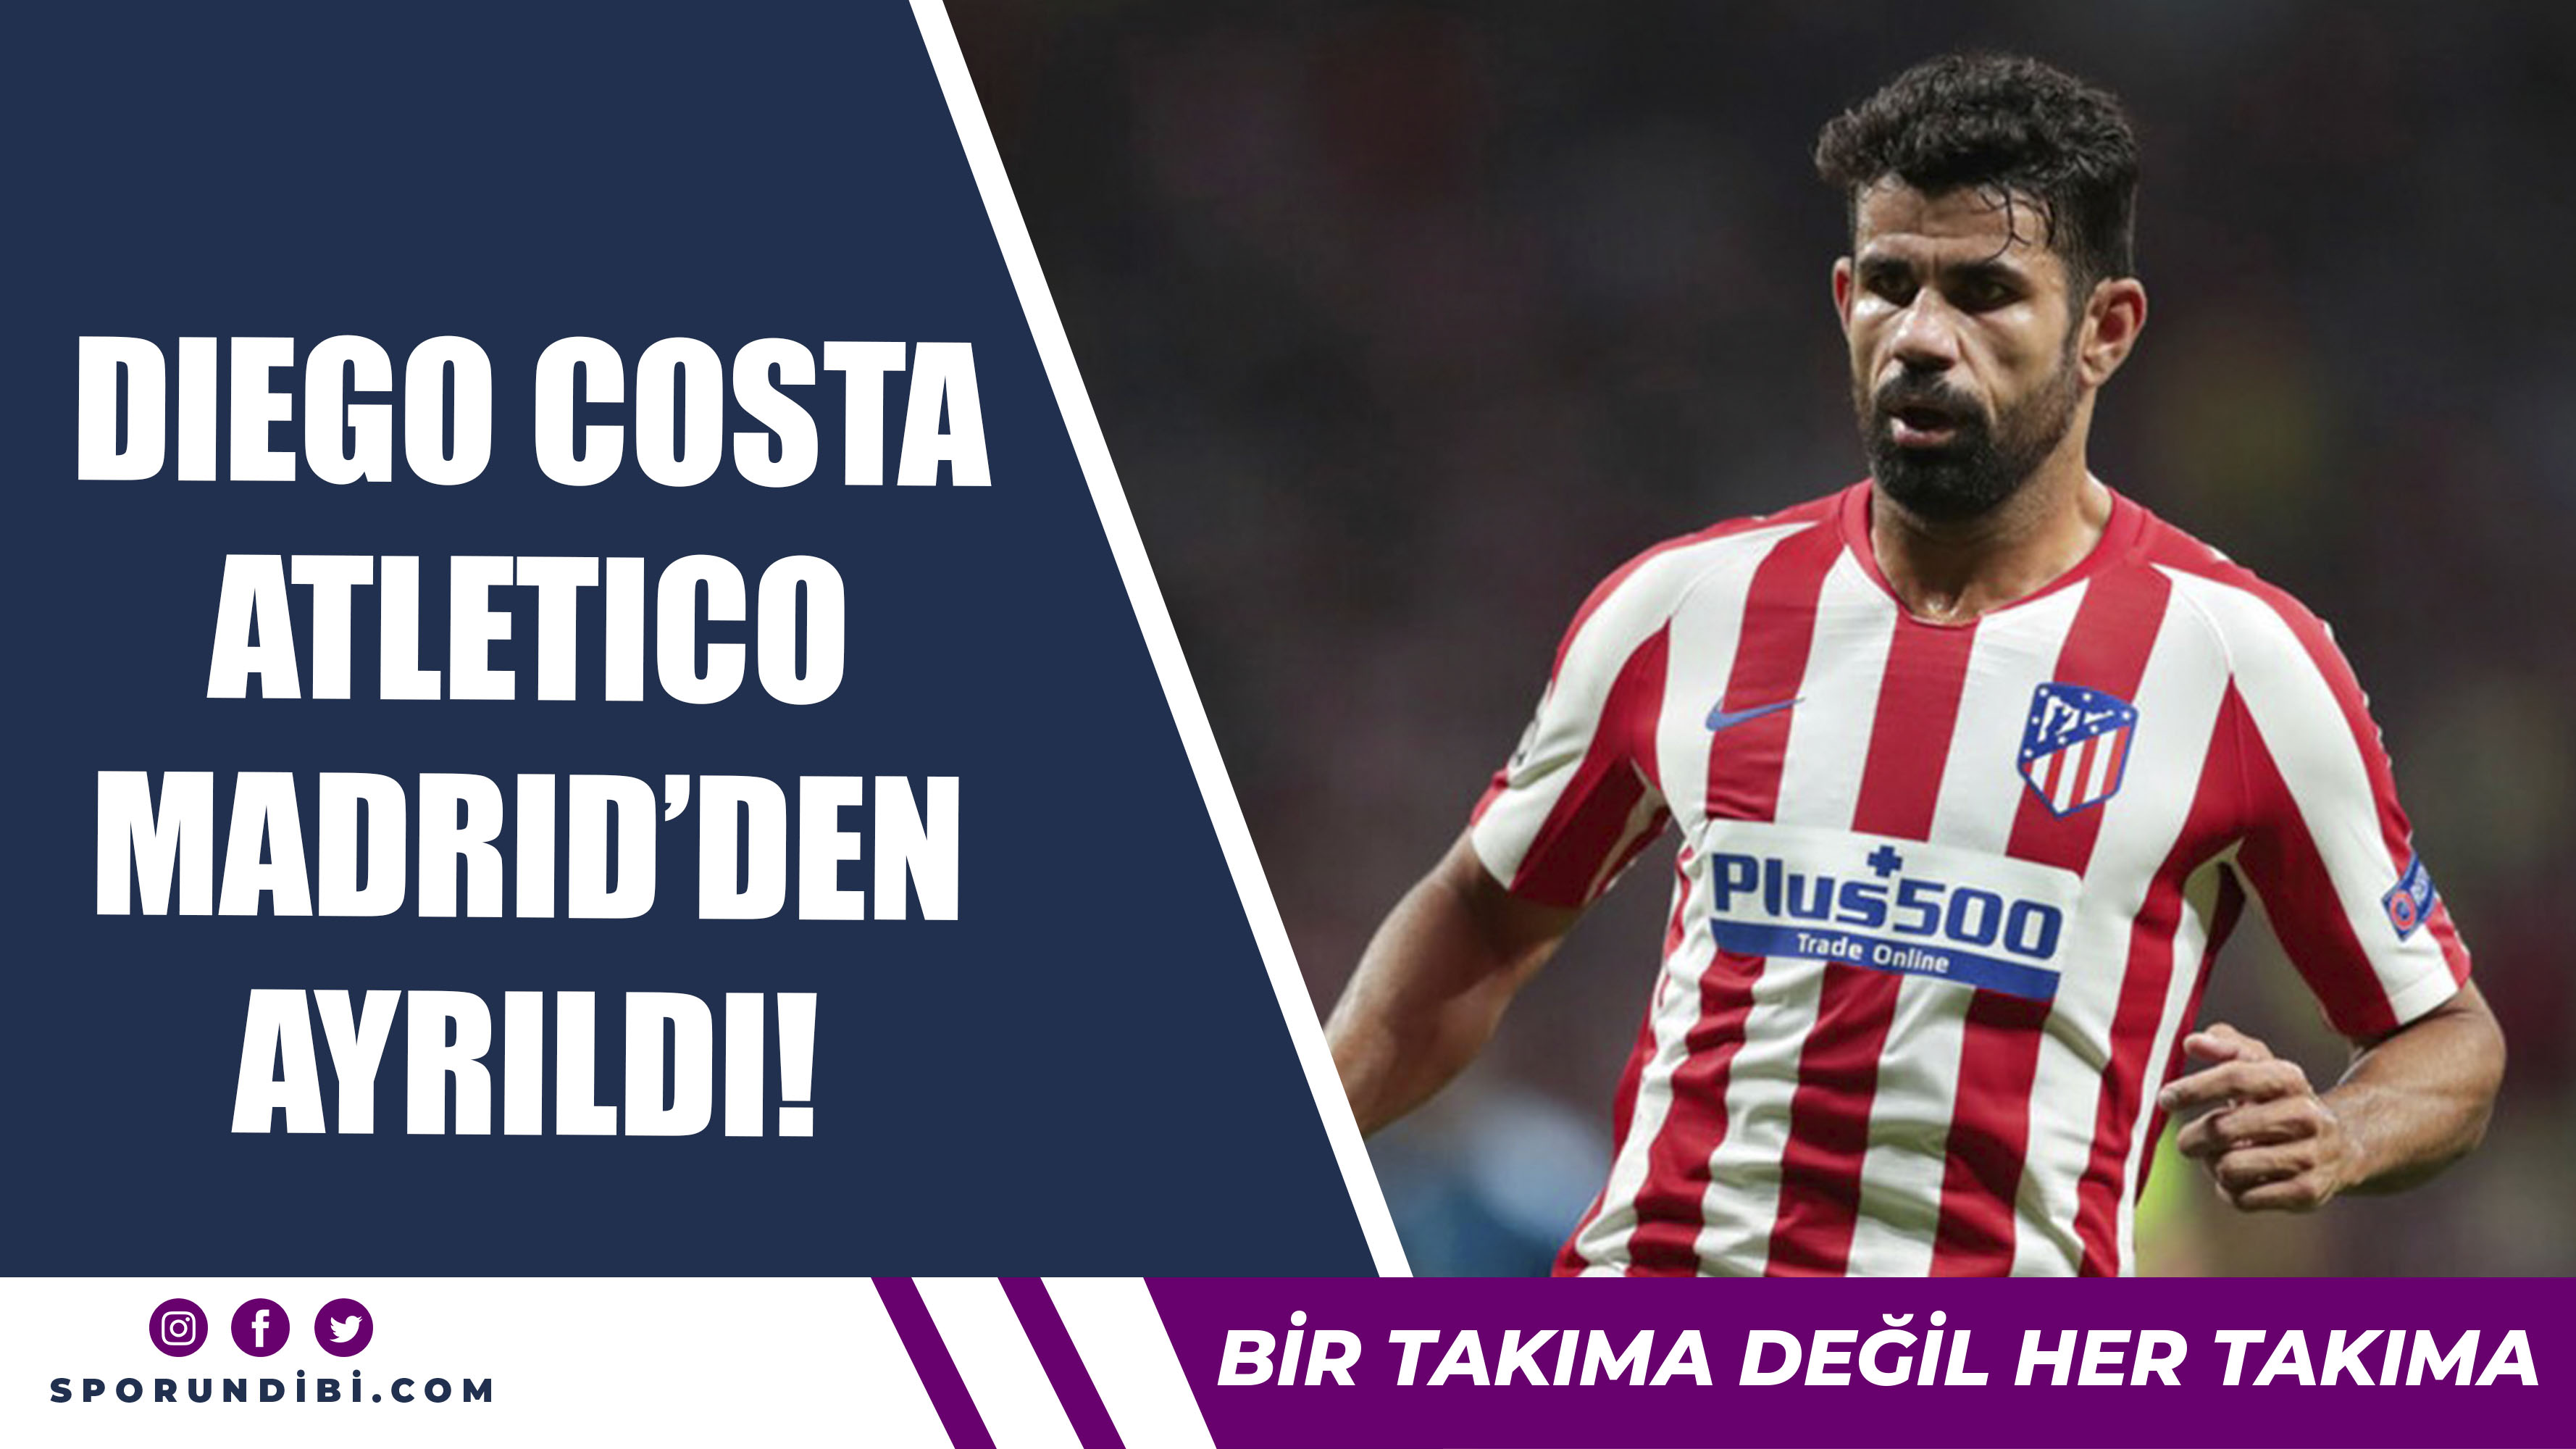 Diego Costa Atletico Madrid'den Ayrıldı!